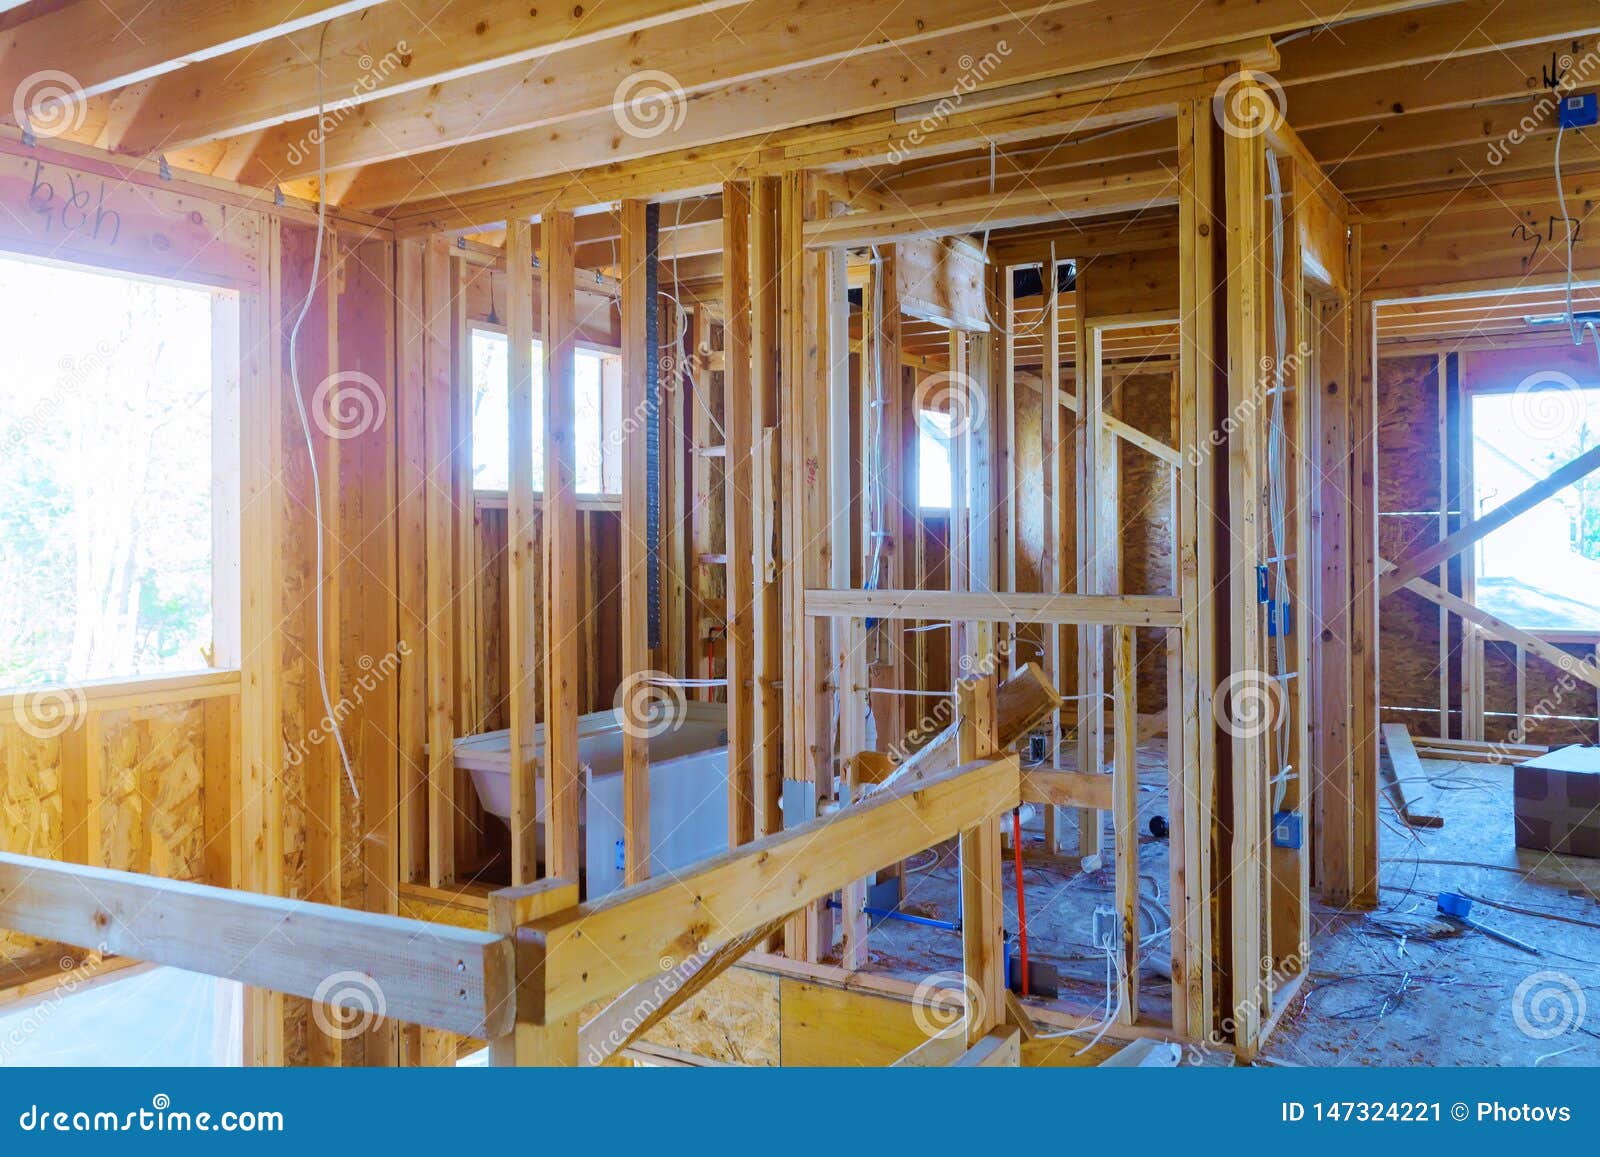 A New Home Under Construction Interior Inside House Frame